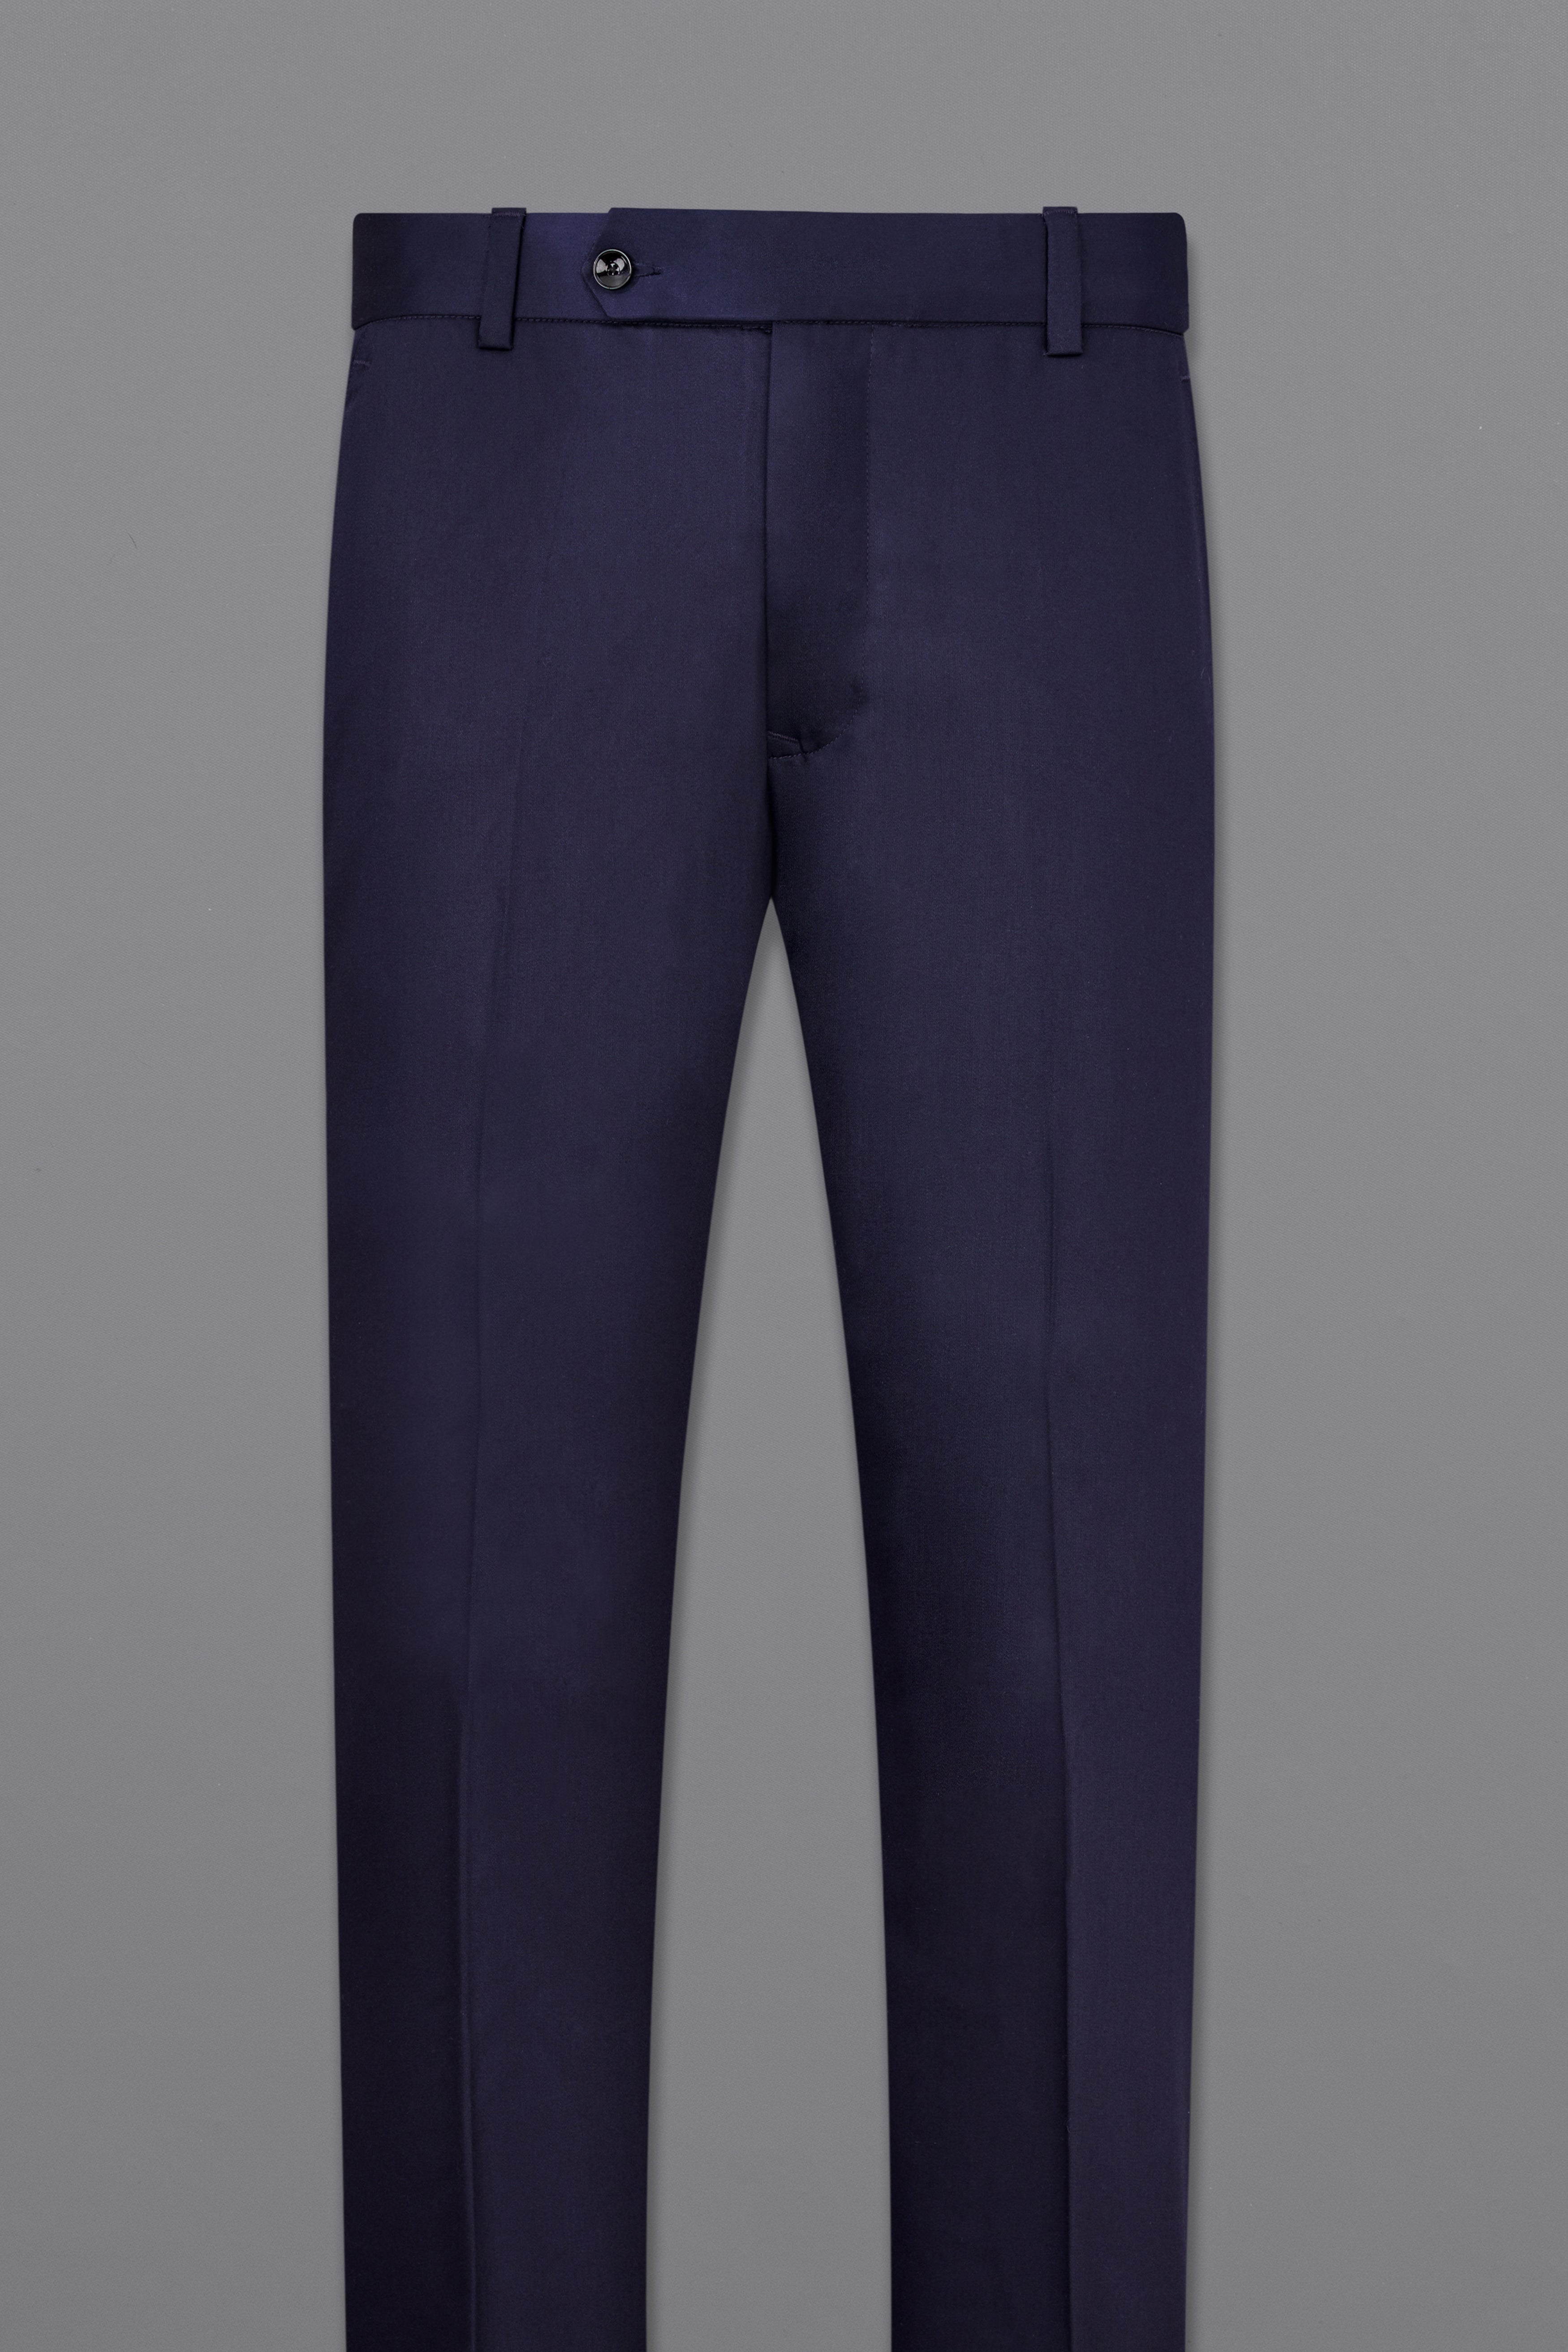 Navy Subtle Sheen Blue Bandhgala Suit